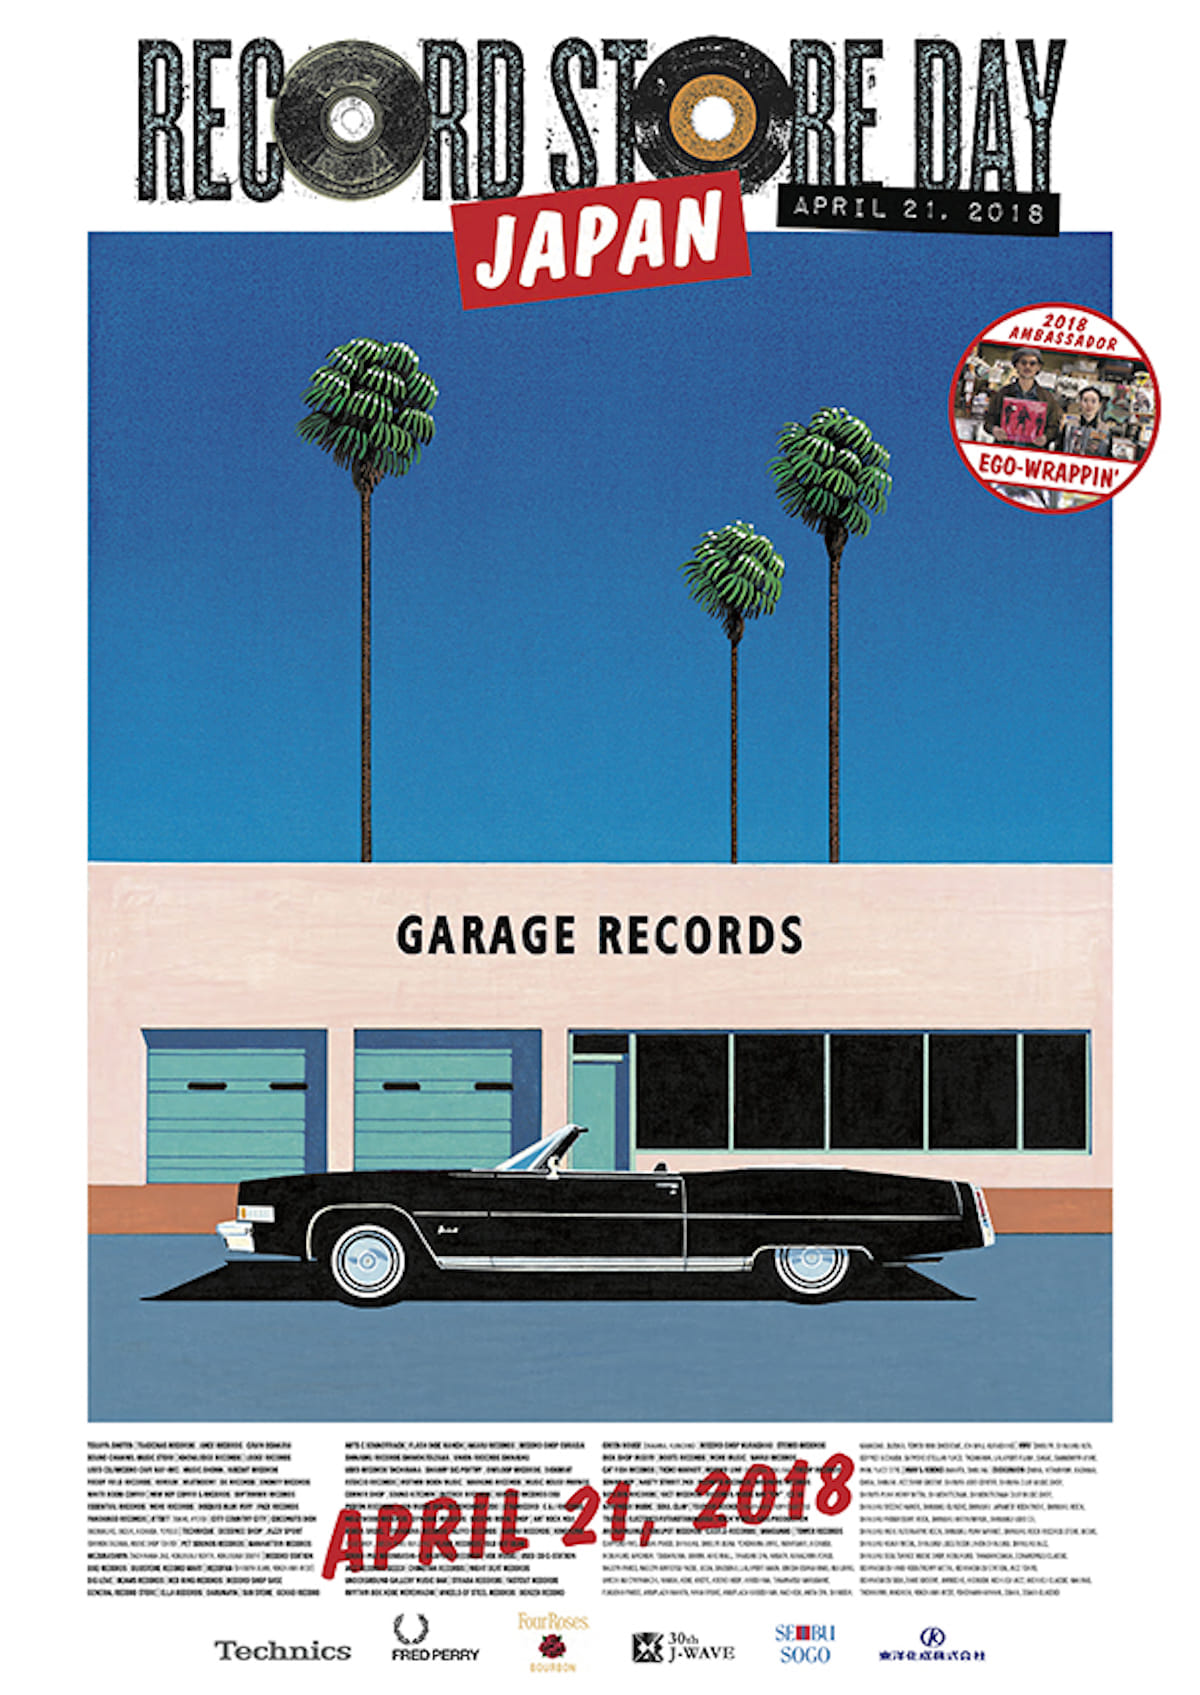 Record Store Day Japan 18 メインビジュアルとなる永井博のイラストが公開 限定オリジナルグッズも販売 Qetic